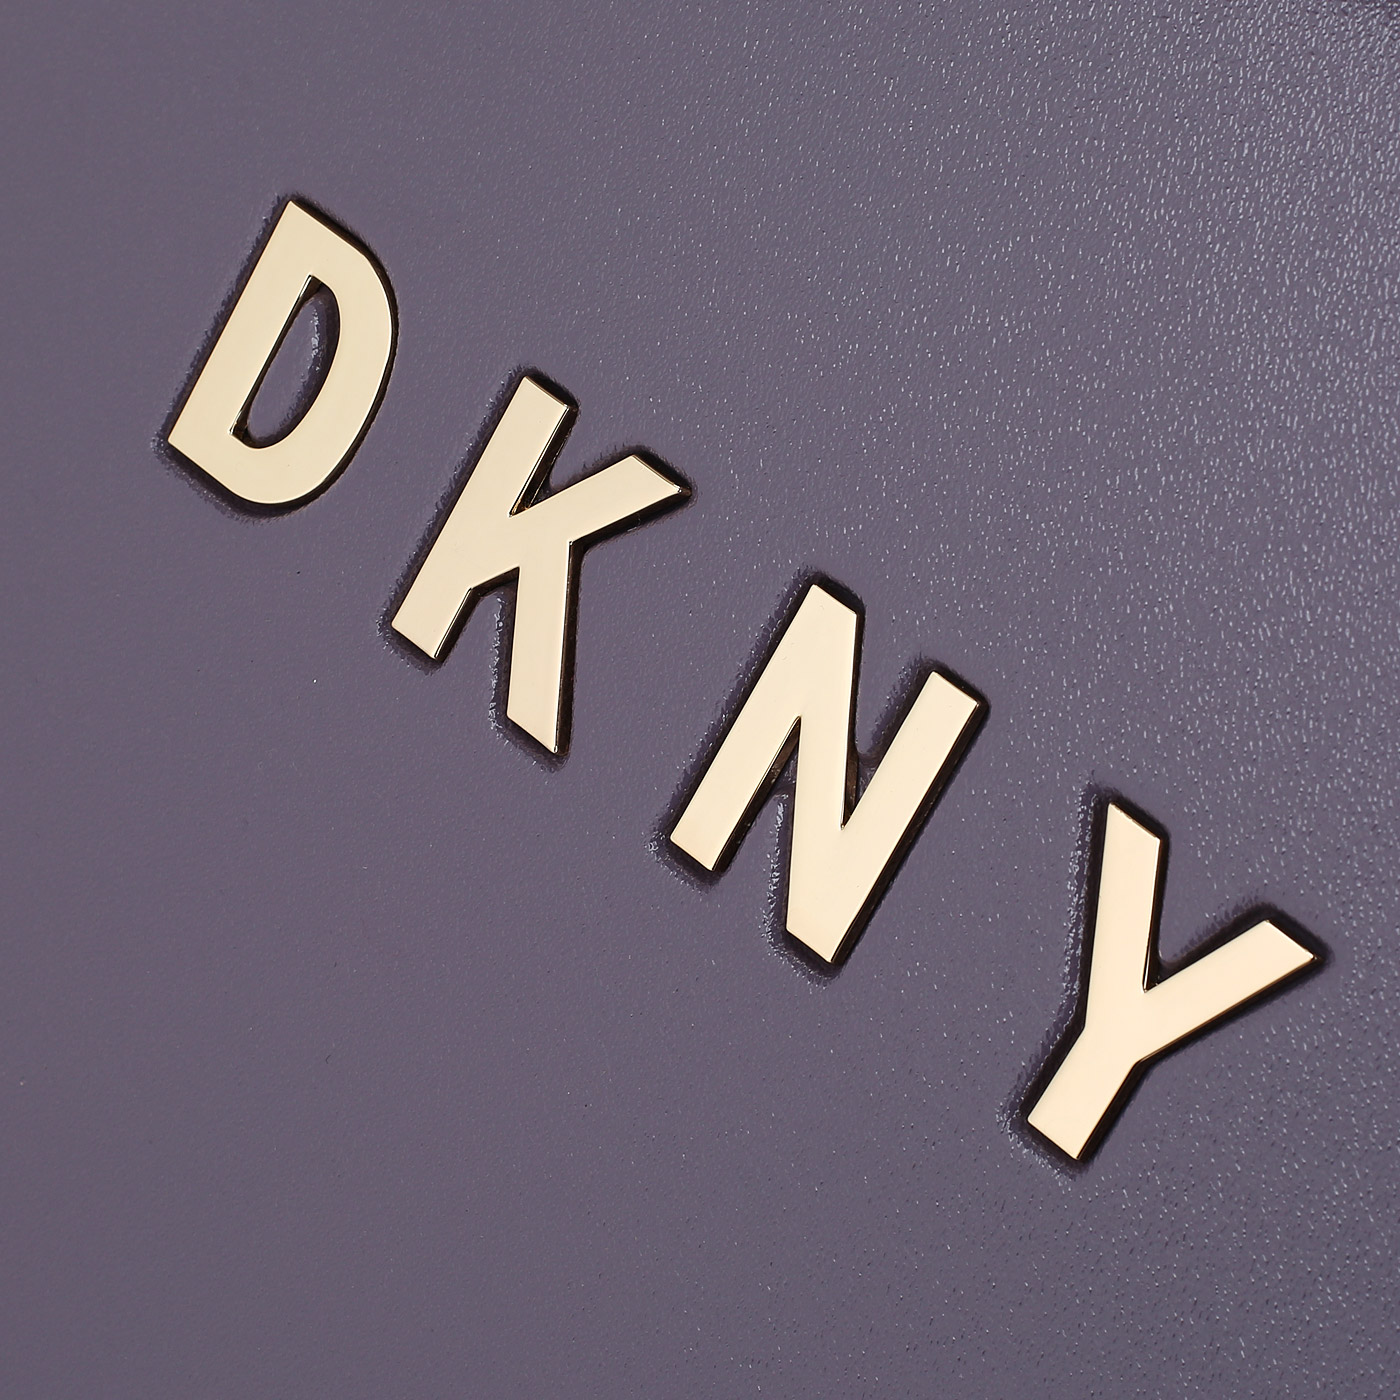 Чемодан большой L из ABS-пластика с кодовым замком DKNY DKNY-014 Metal Logo